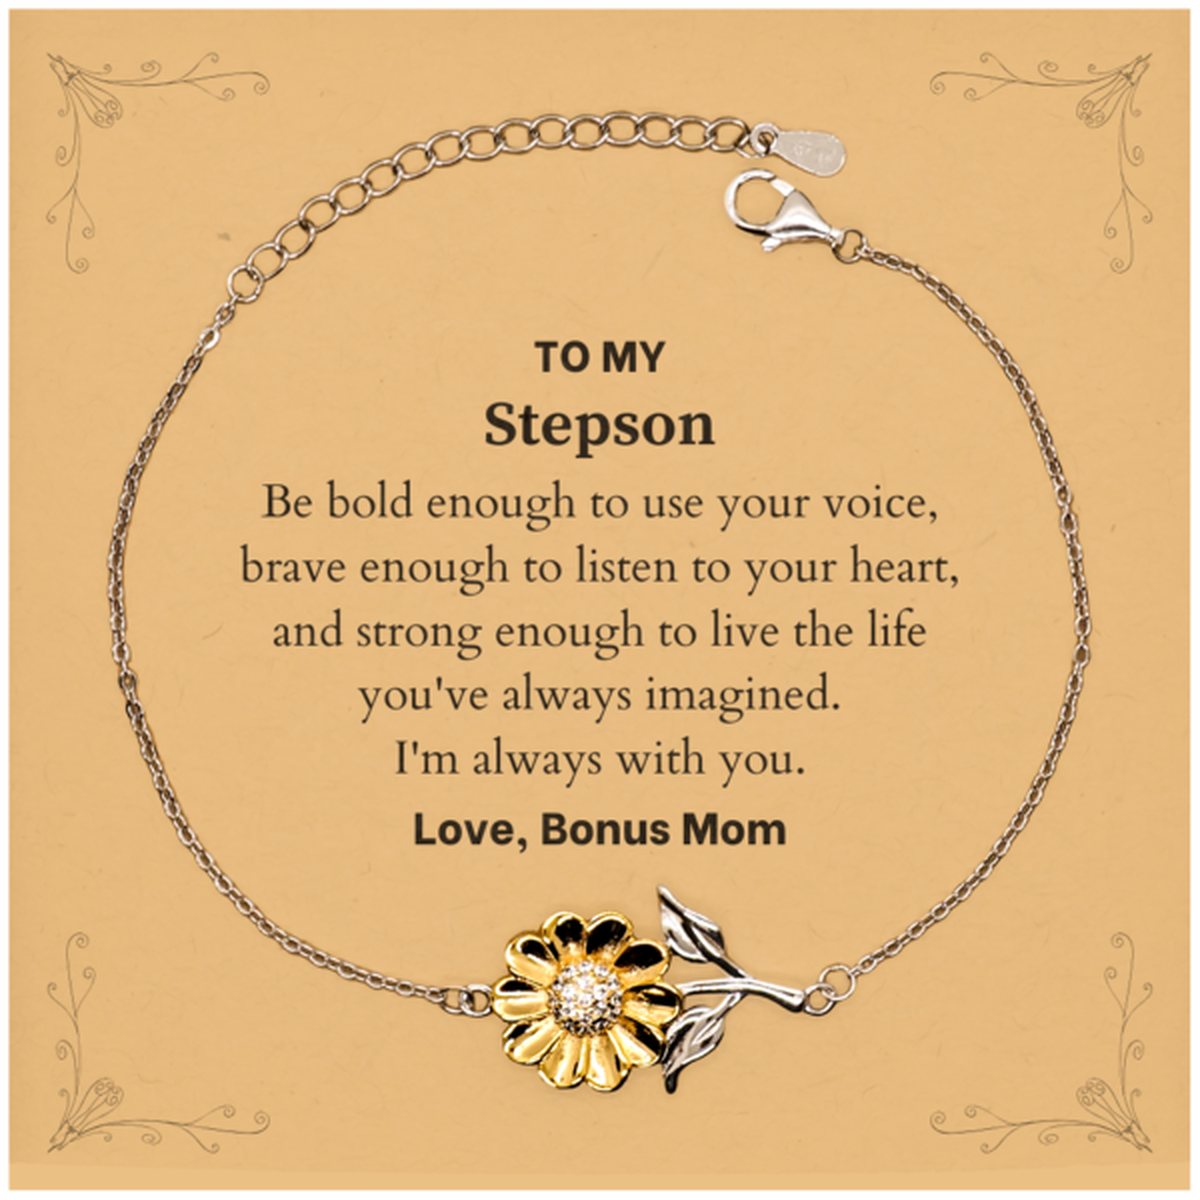 Keepsake Stepson Sunflower Bracelet Gift Idea Graduation Christmas Birthday Stepson from Bonus Mom, Stepson Be bold enough to use your voice, brave enough to listen to your heart. Love, Bonus Mom